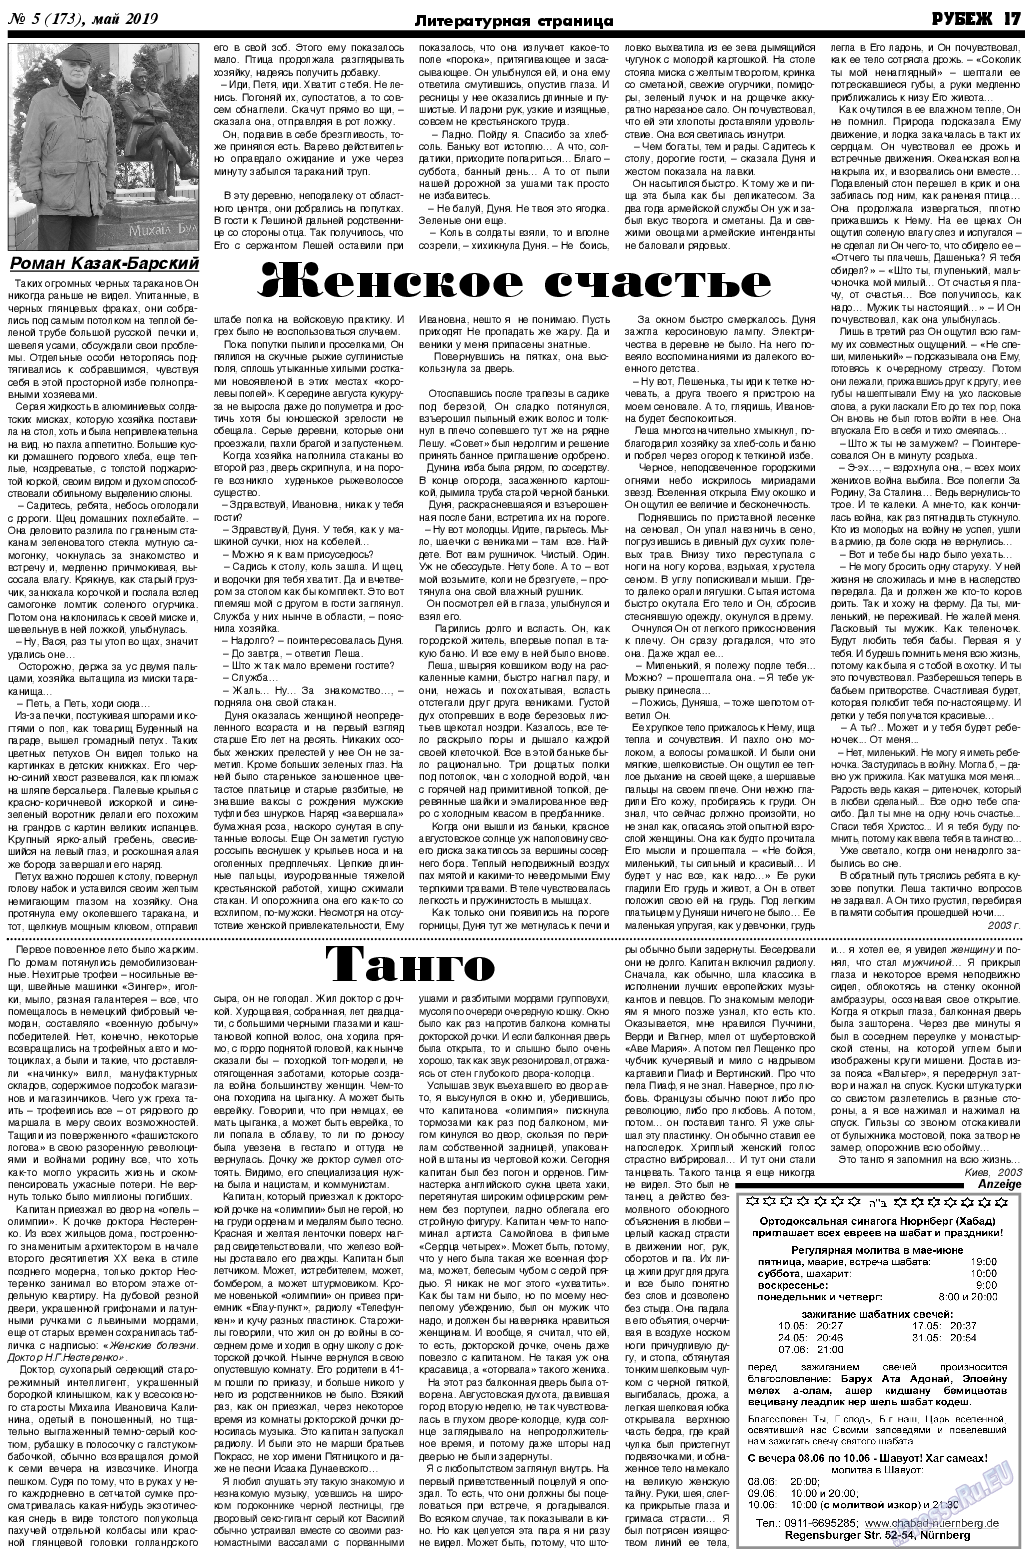 Рубеж, газета. 2019 №5 стр.17